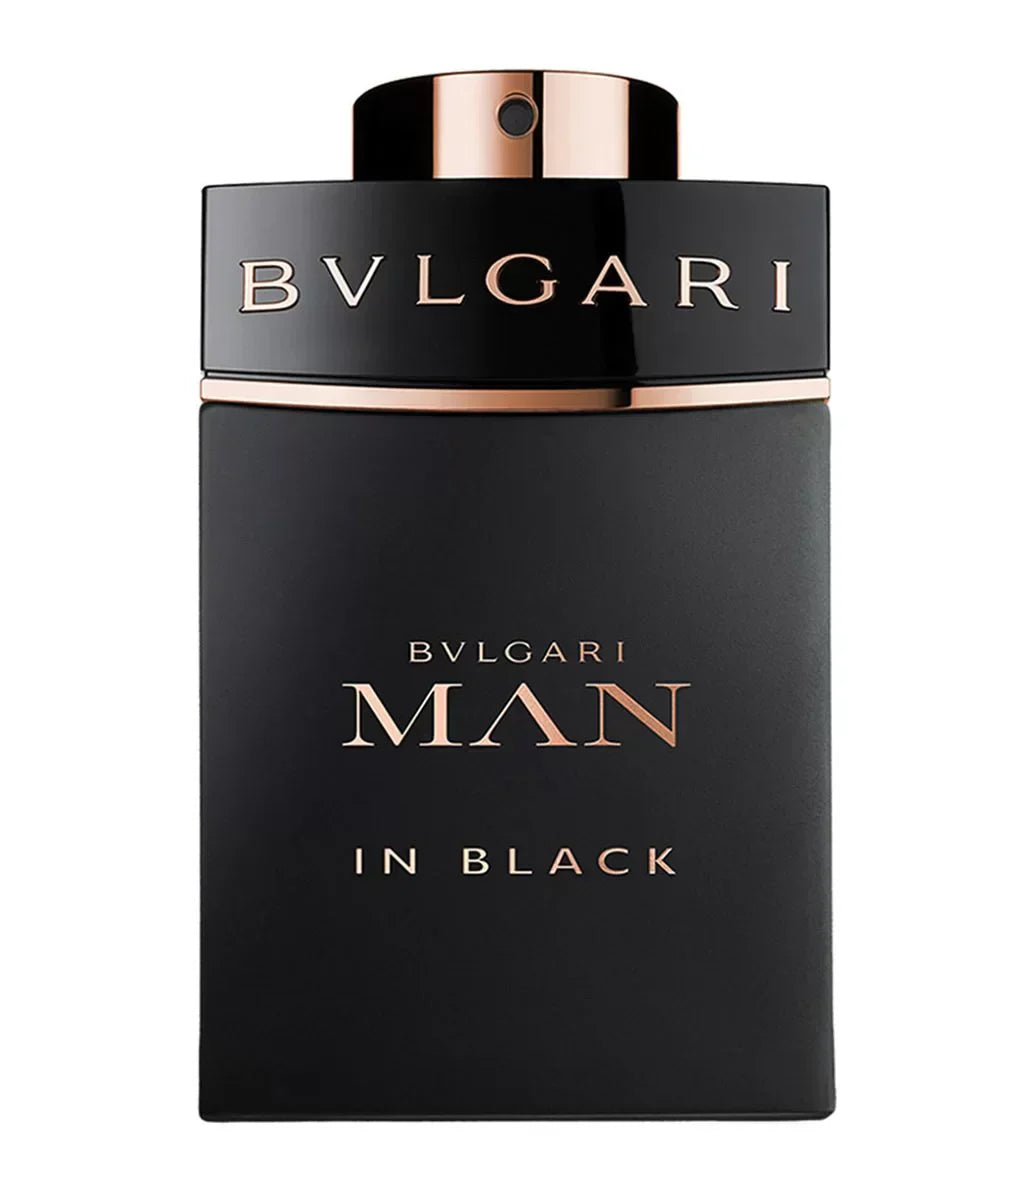 3 Parfums Bvlgari In Black, Giorgio Armani Acqua Di Gio, L'Homme Prada Intense (Eau Parfum)